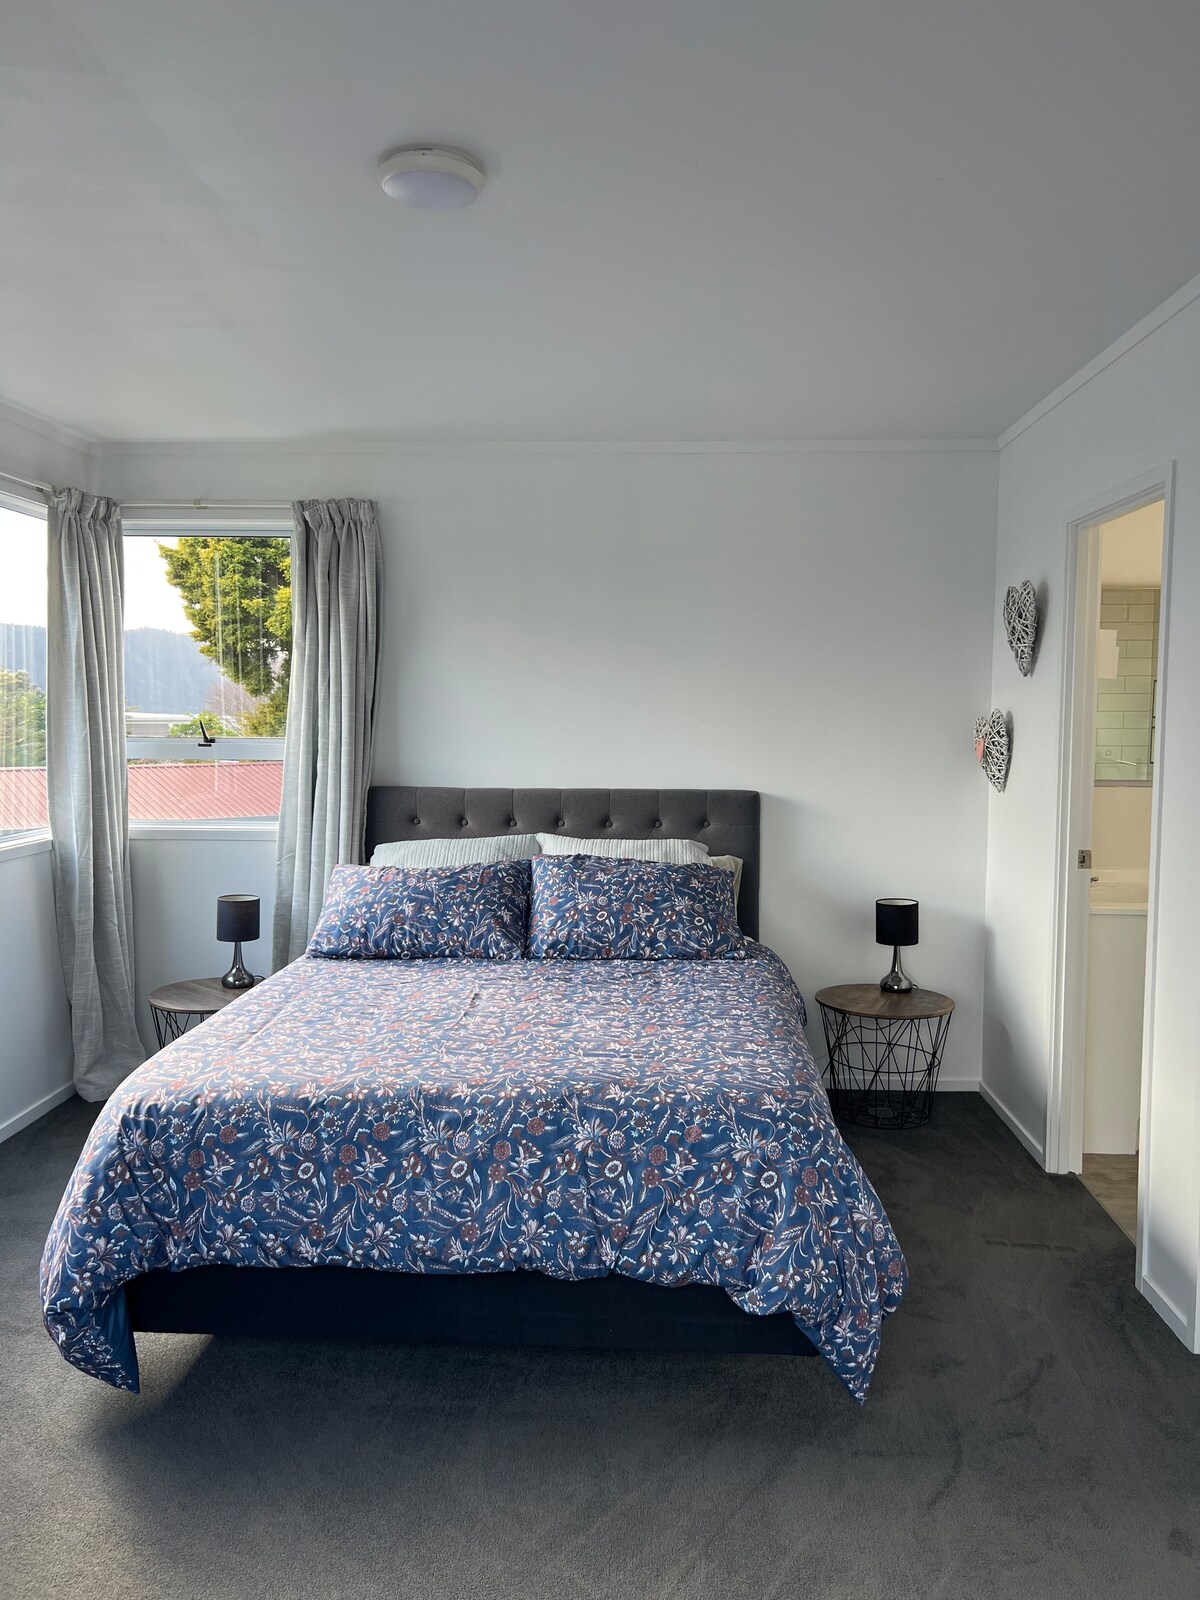 Rotoiti Lake House, Gisborne Point
- 3 Bedroom